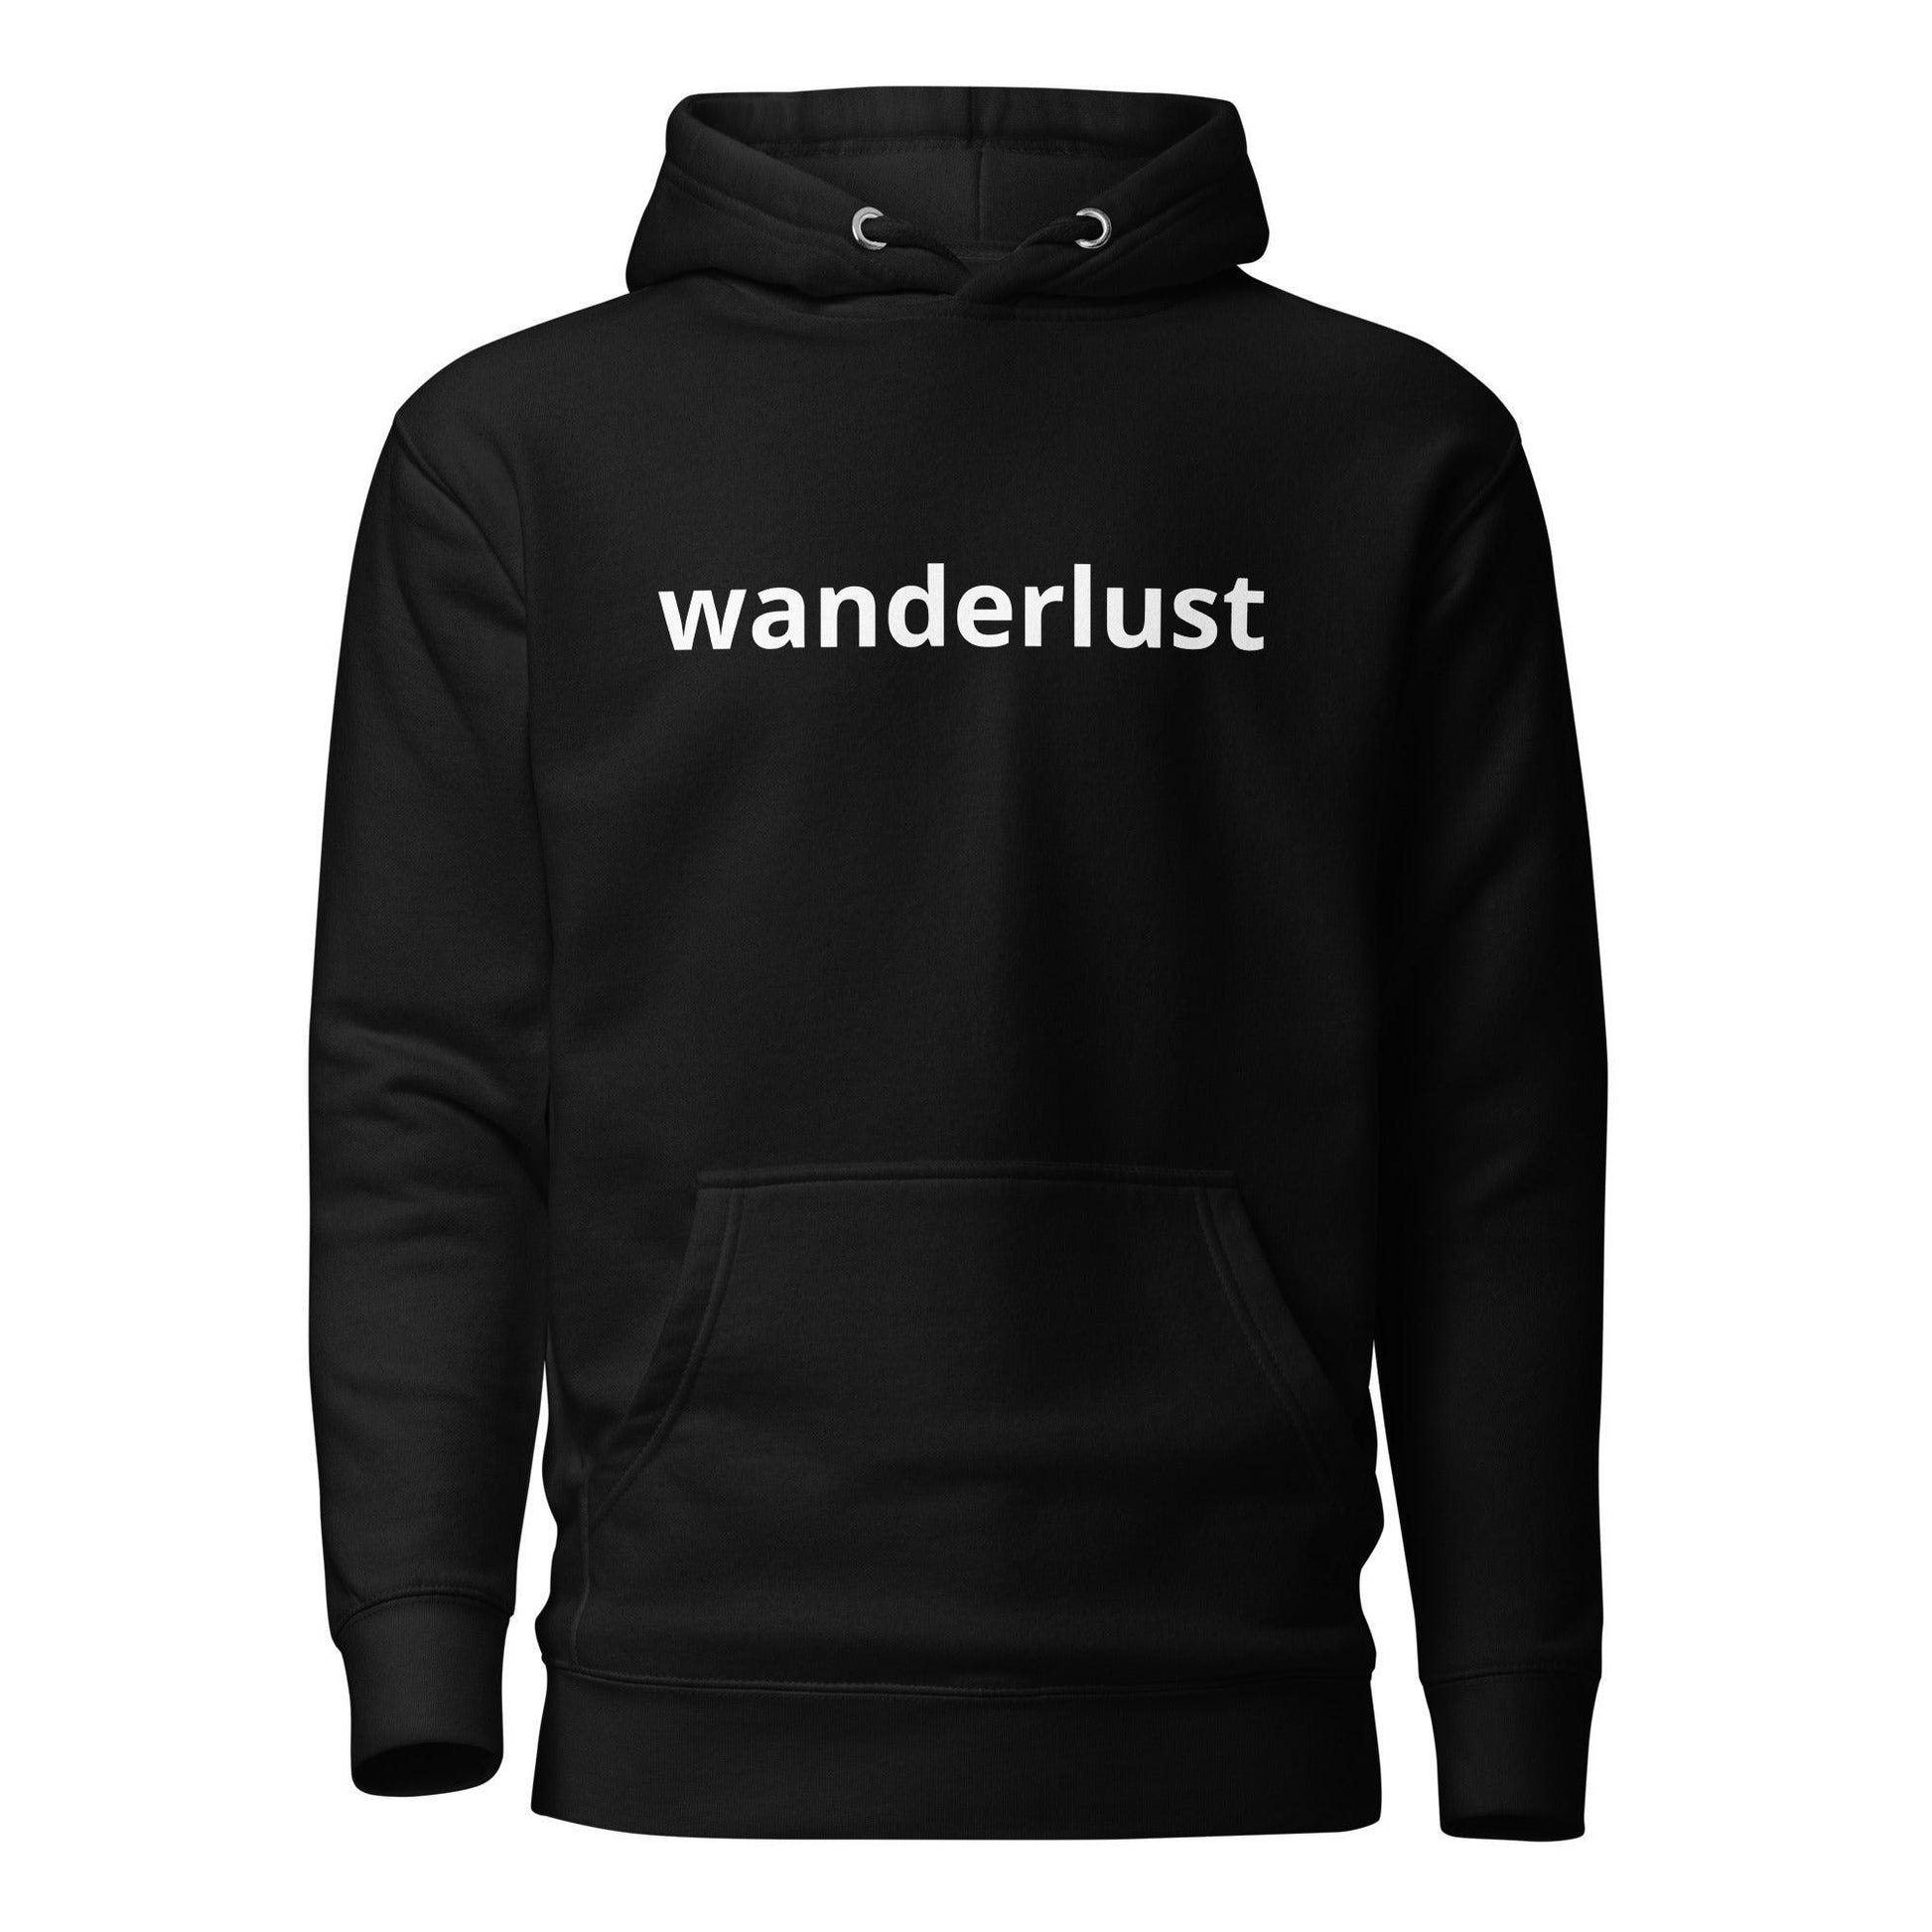 Wanderlust Hoodie - Adventure Threads Company